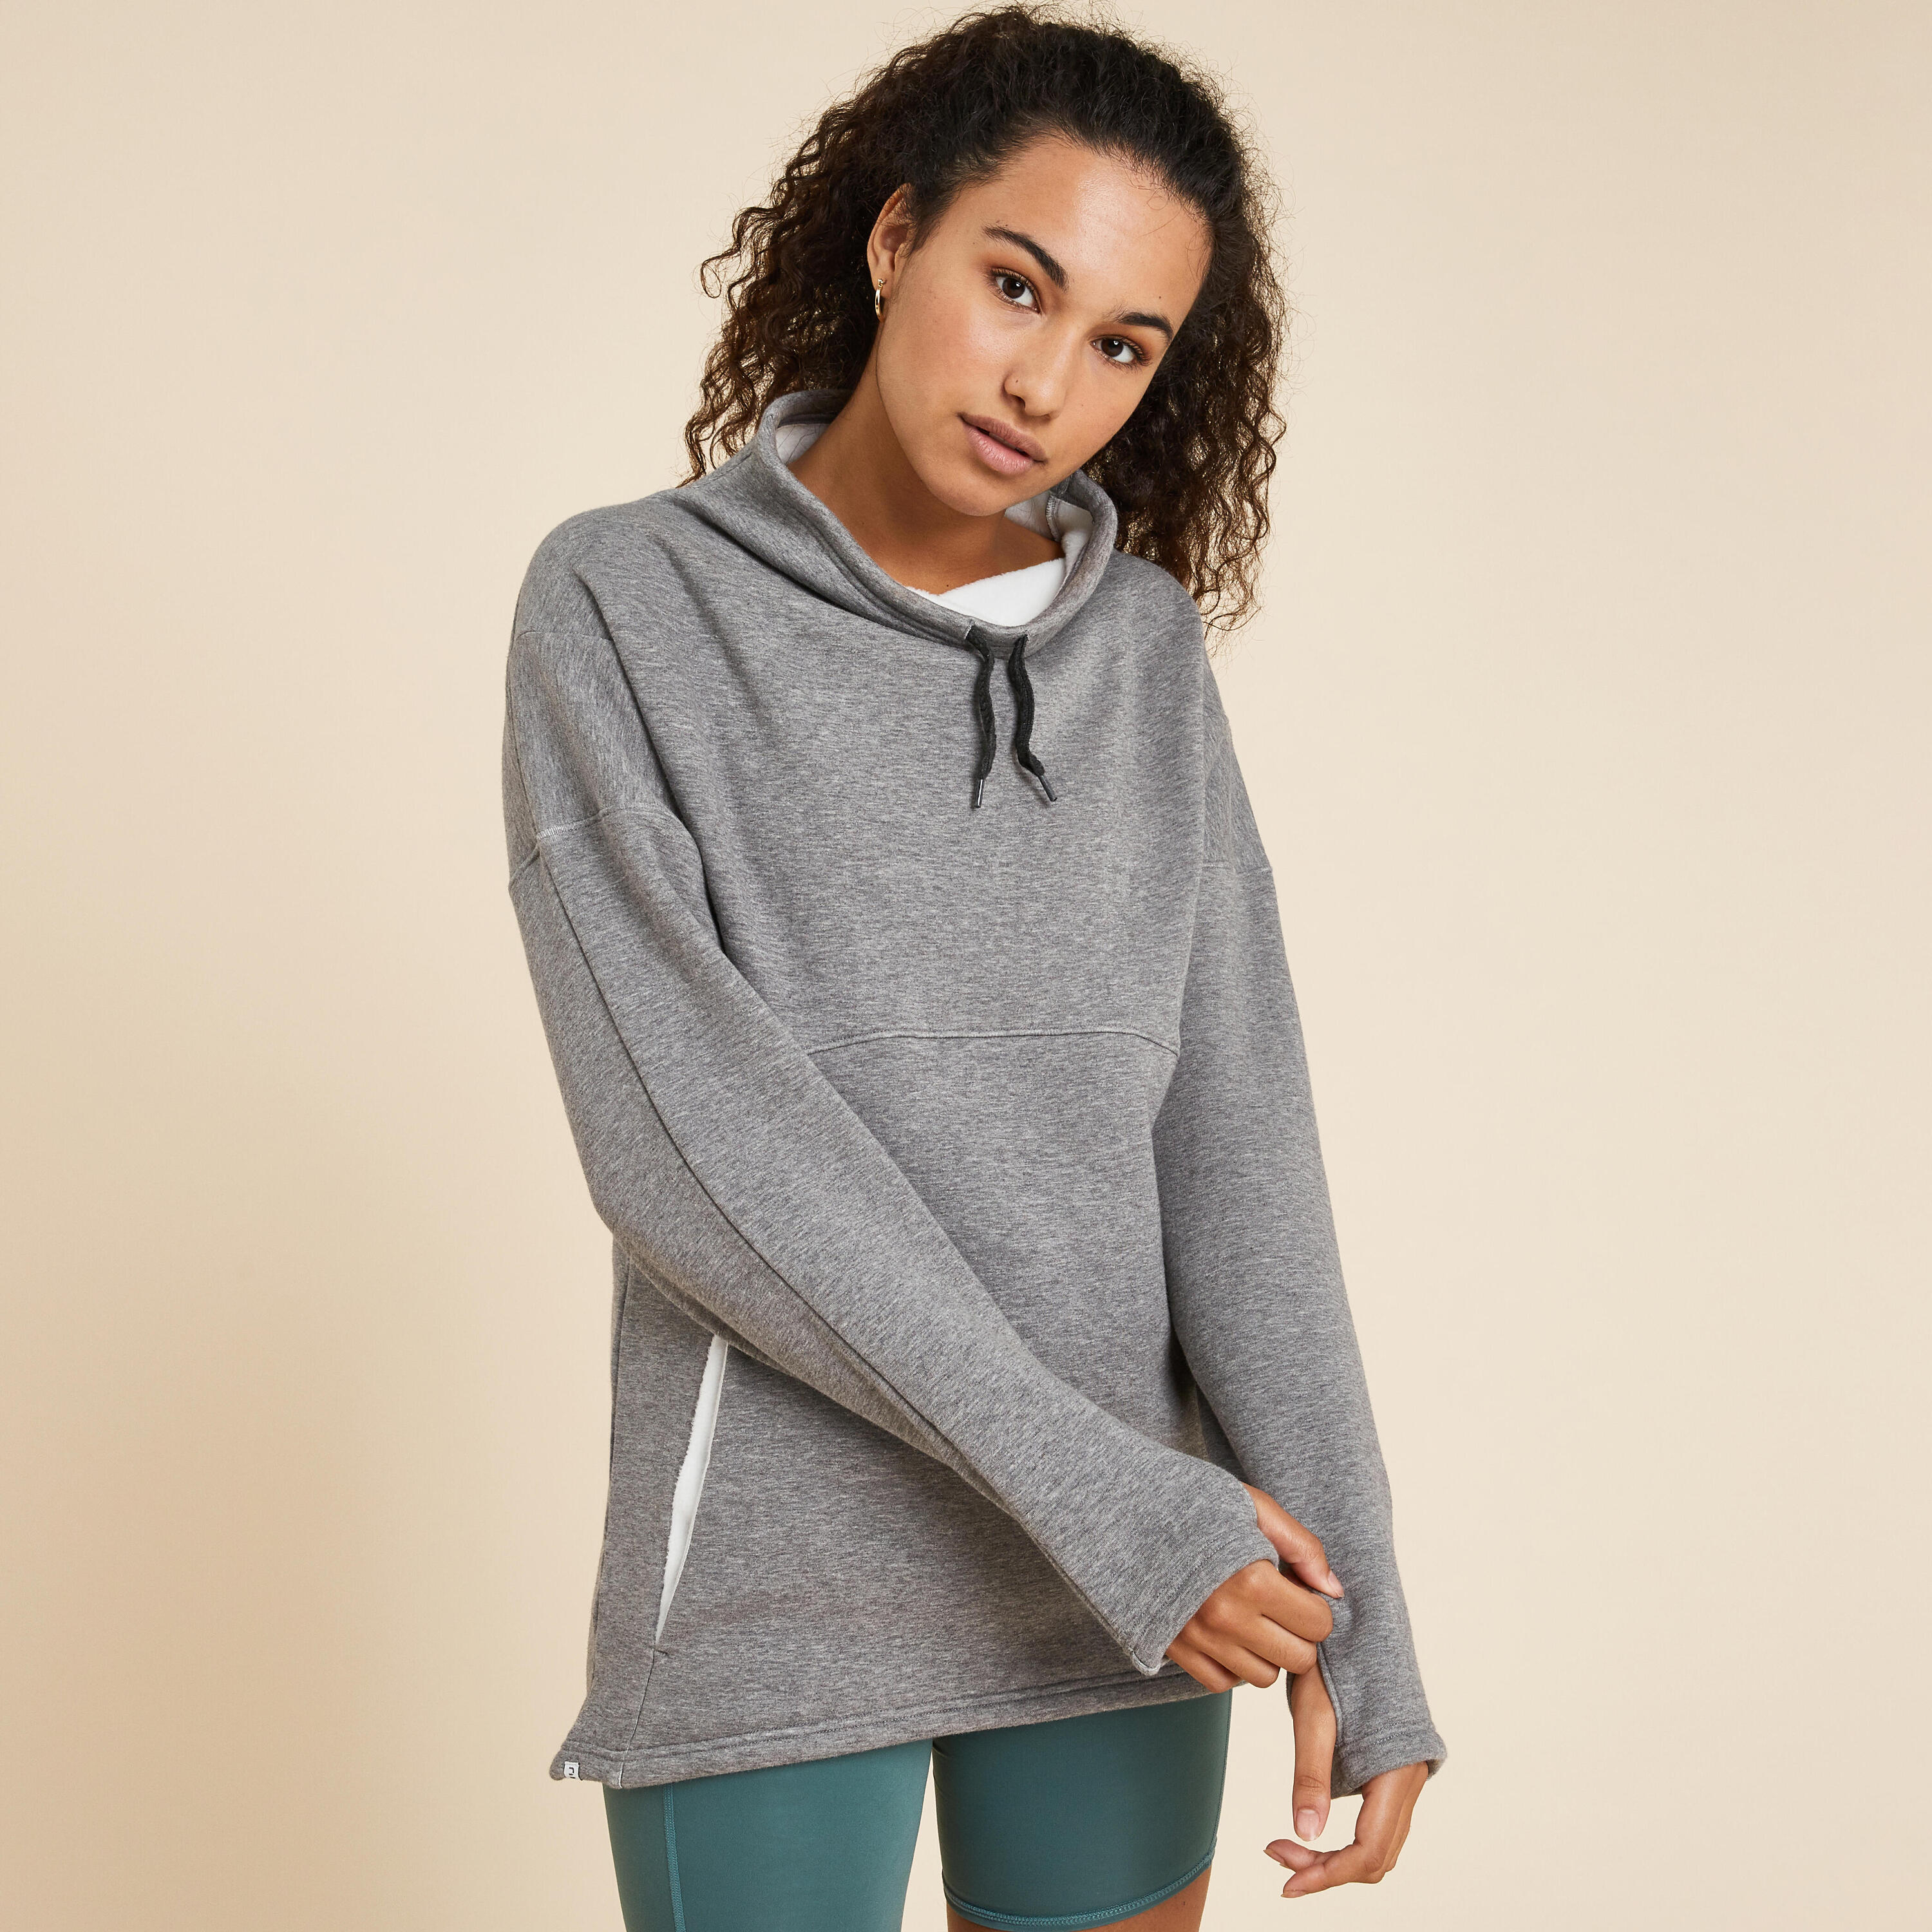 Unisex Yoga Warm Sweatshirt - Grey 2/11